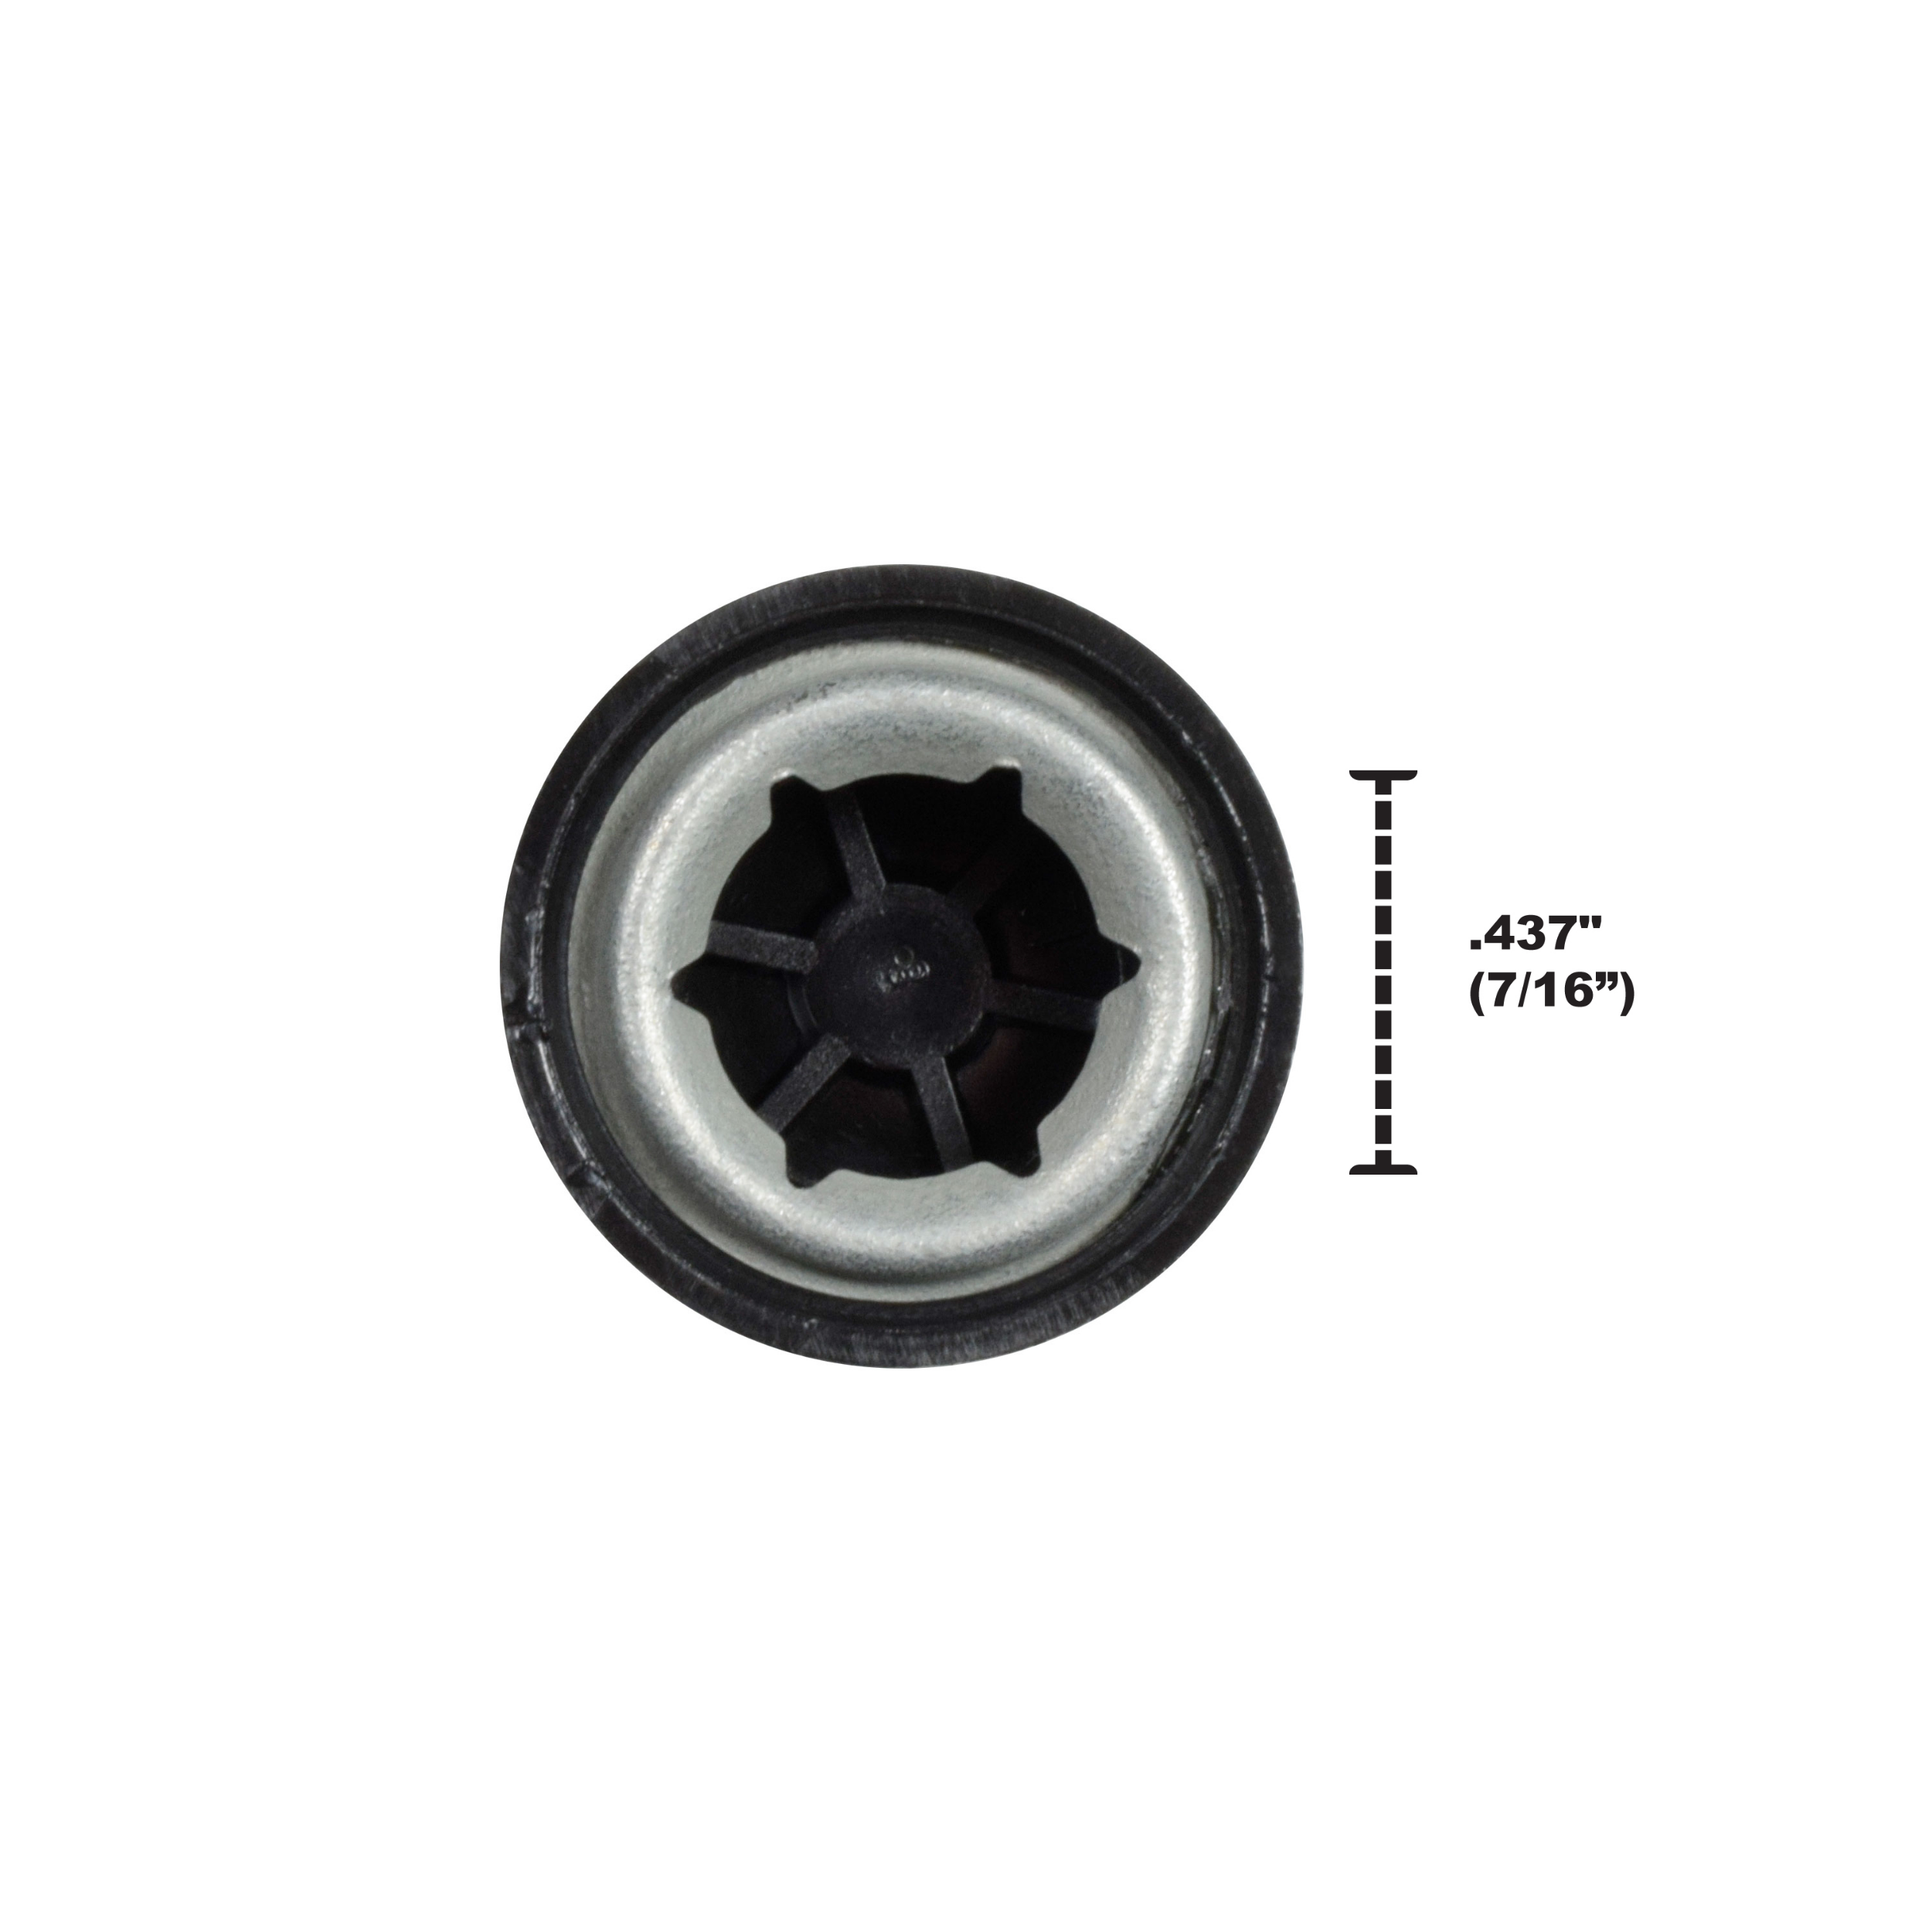 Power Wheels .437 Cap Nut Set of 4 Black 00801-1451 K3 for sale online 